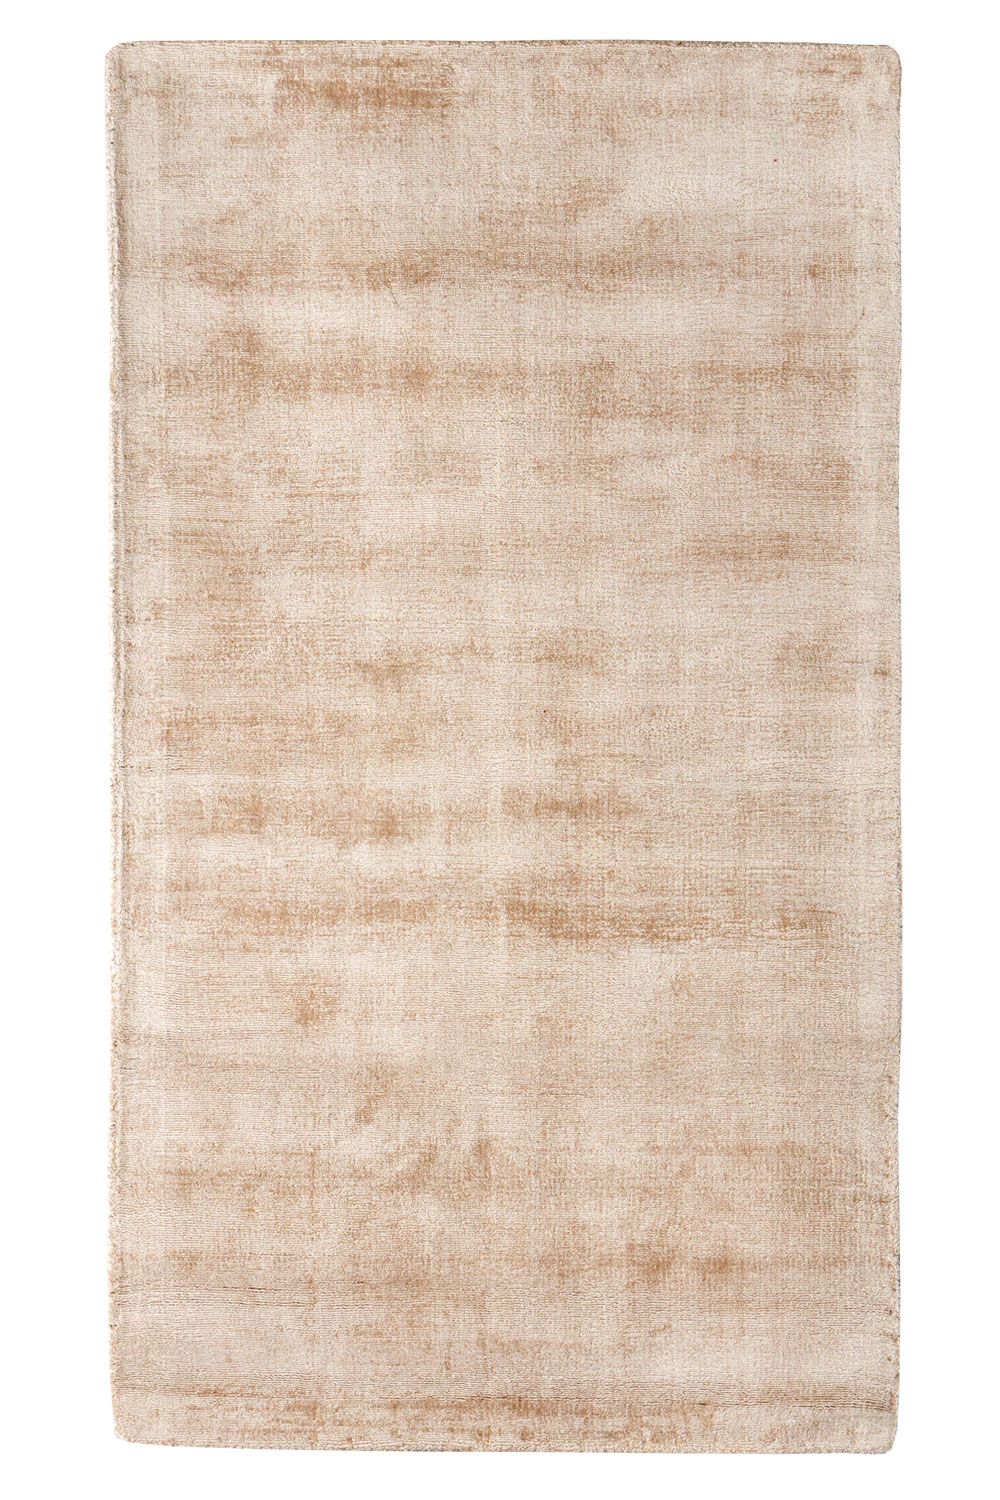 Kusový koberec Bakero Rio Ivory 130x190 cm